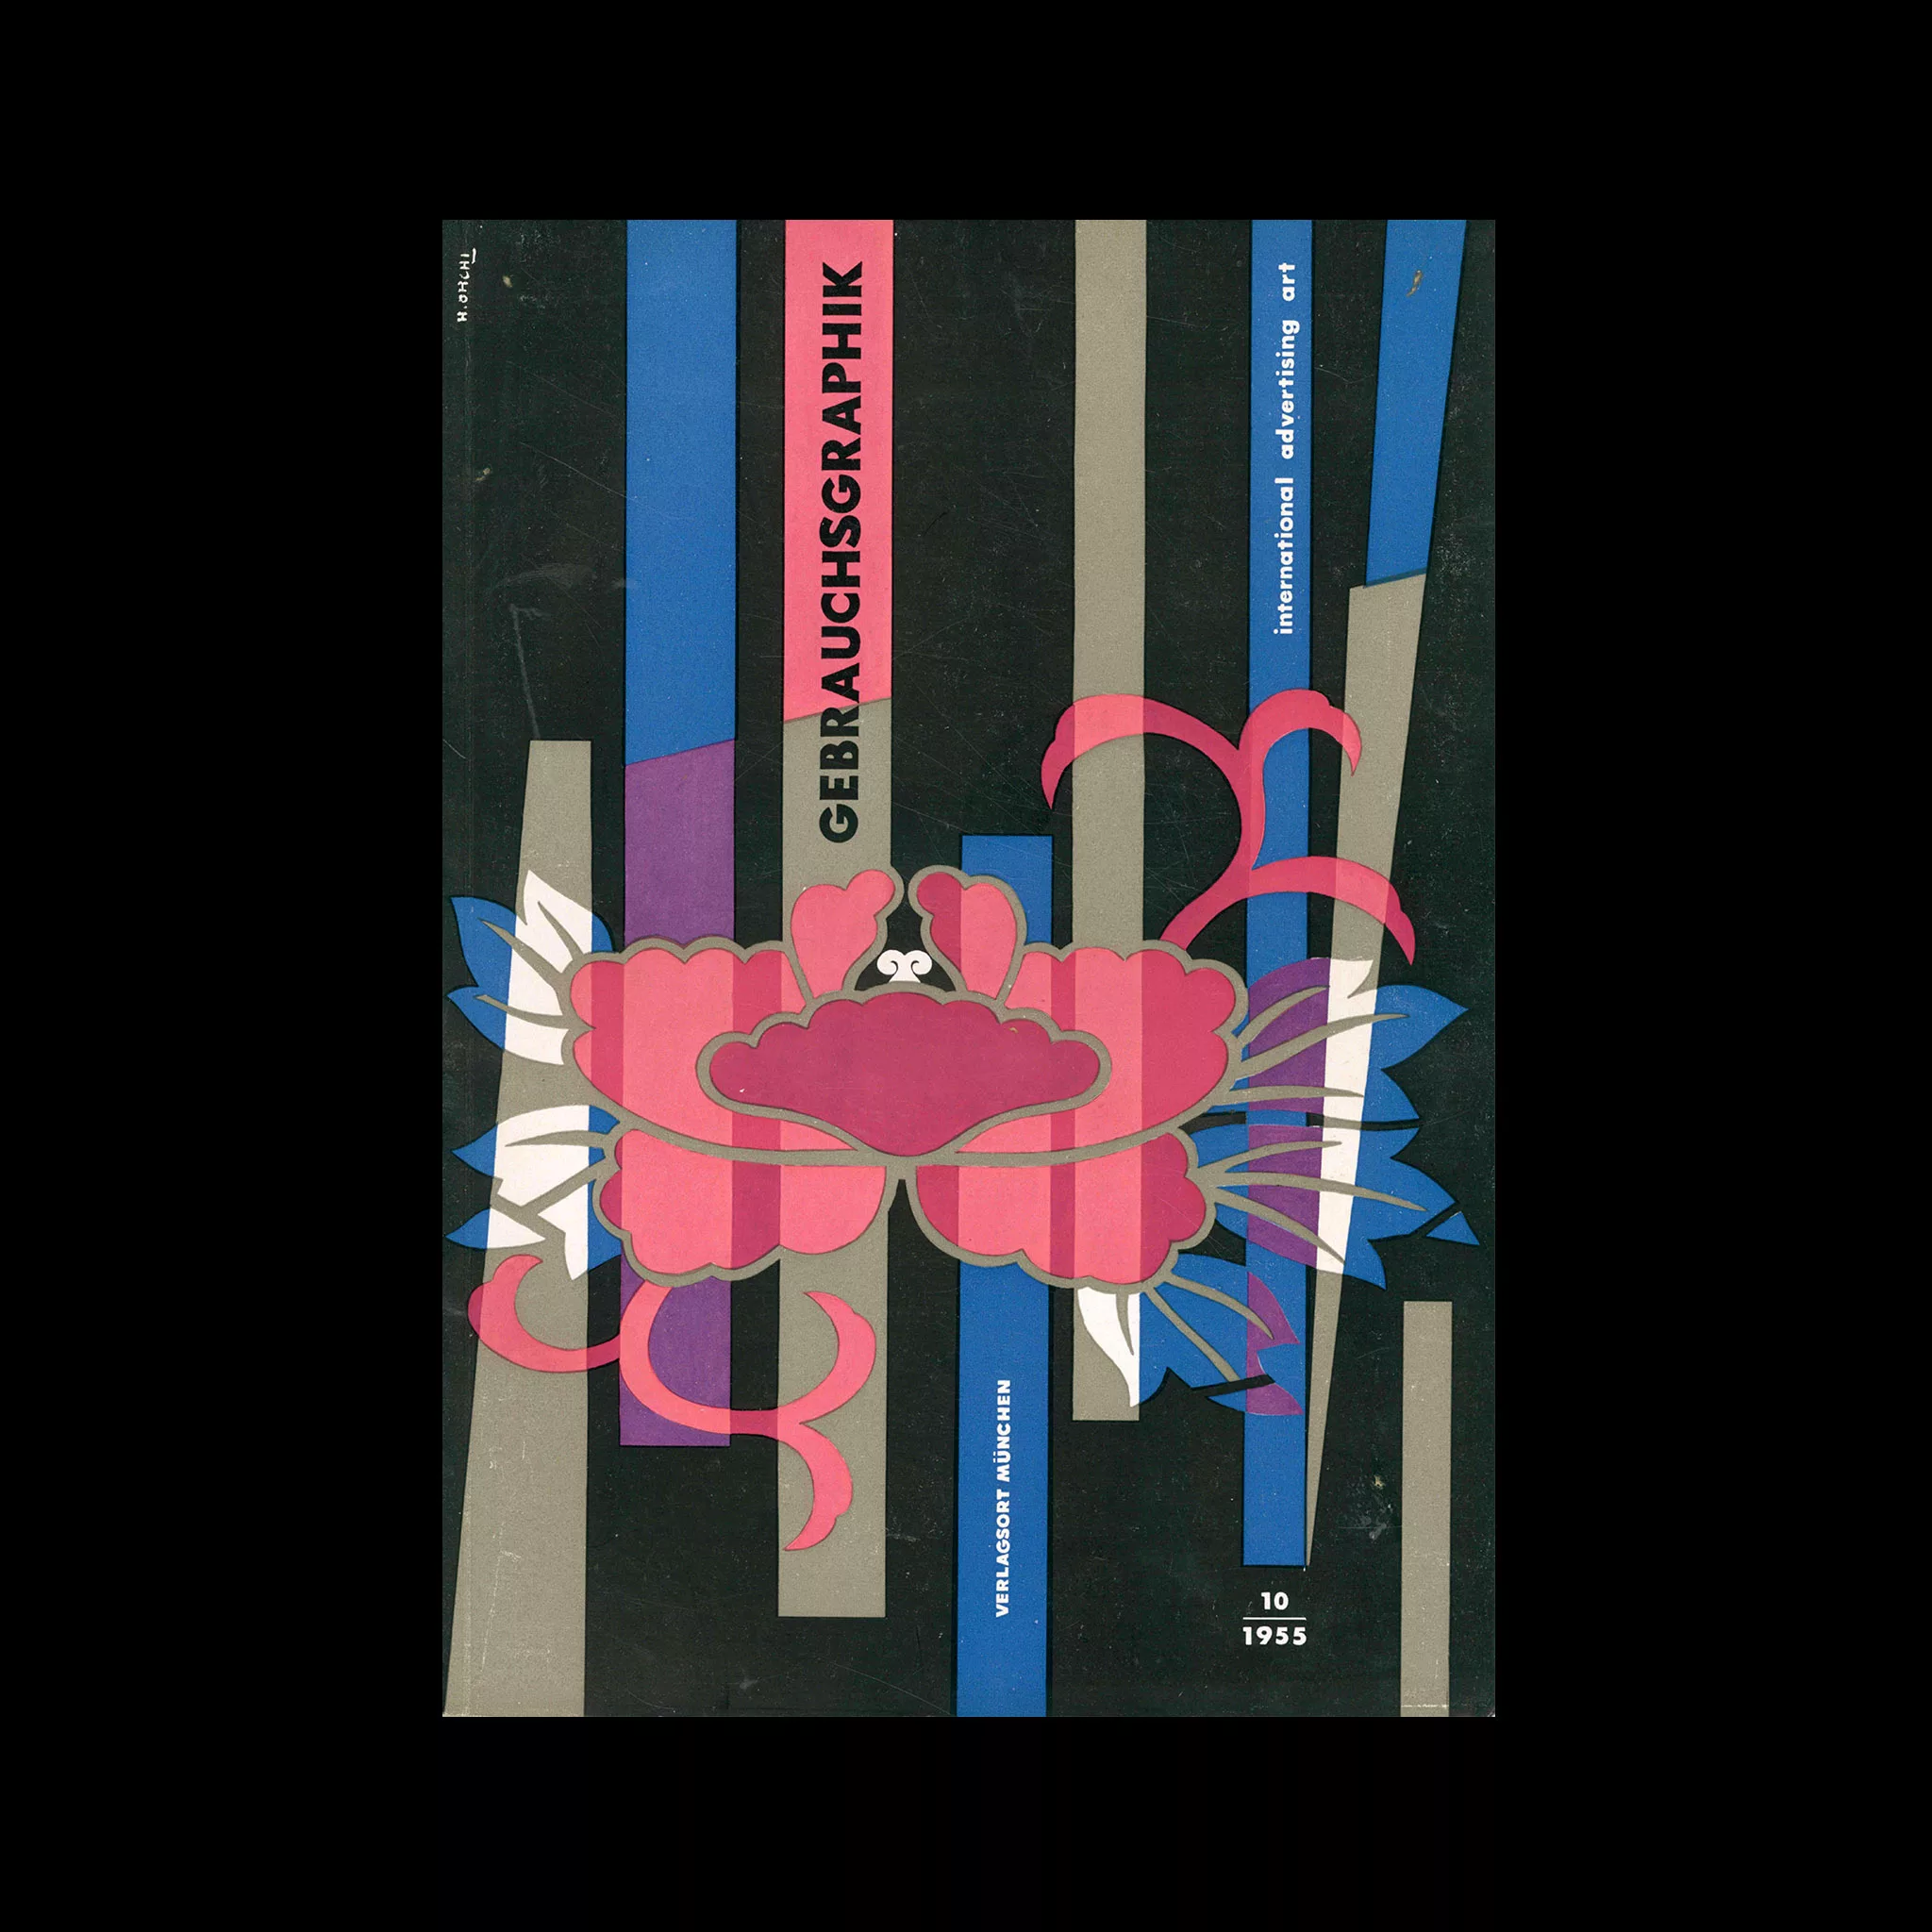 Gebrauchsgraphik, 10, 1955. Cover design by Hiroshi Ohchi